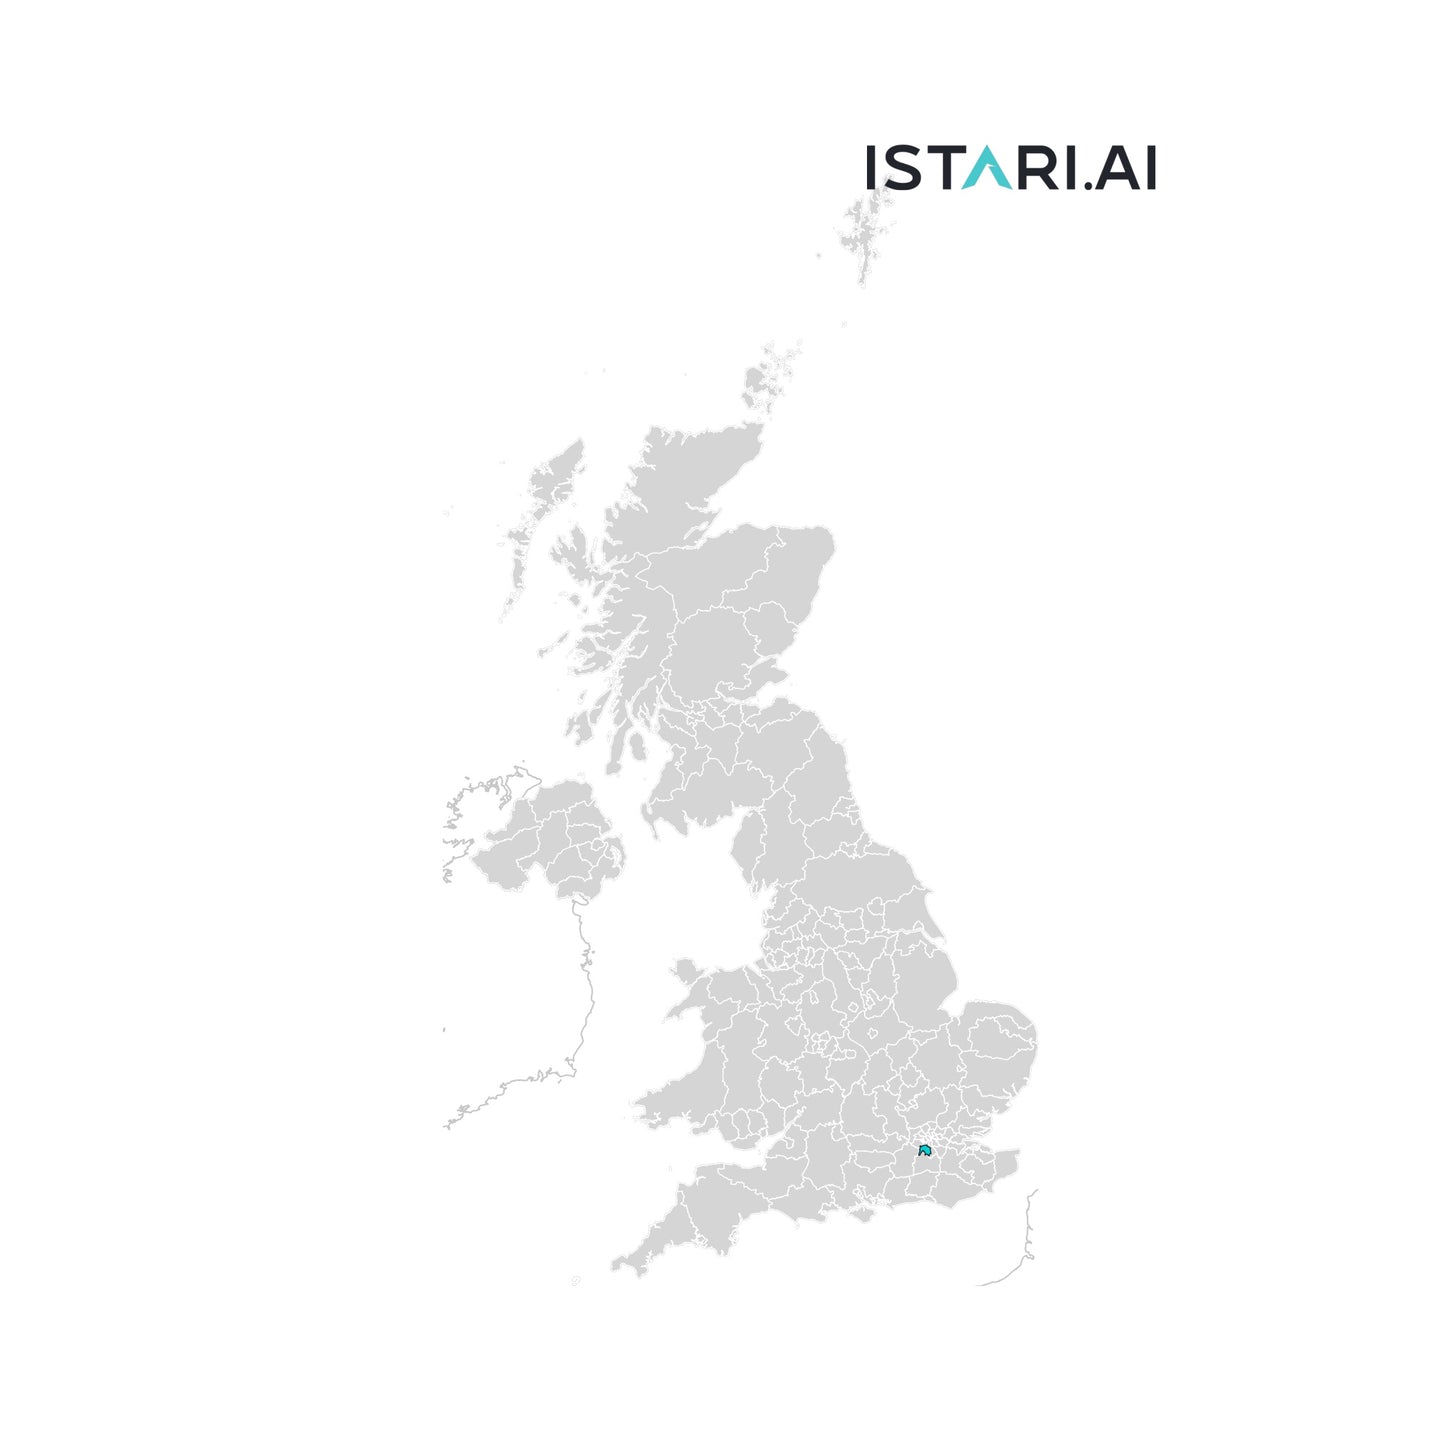 Artificial Intelligence AI Company List Merton, Kingston upon Thames and Sutton United Kingdom